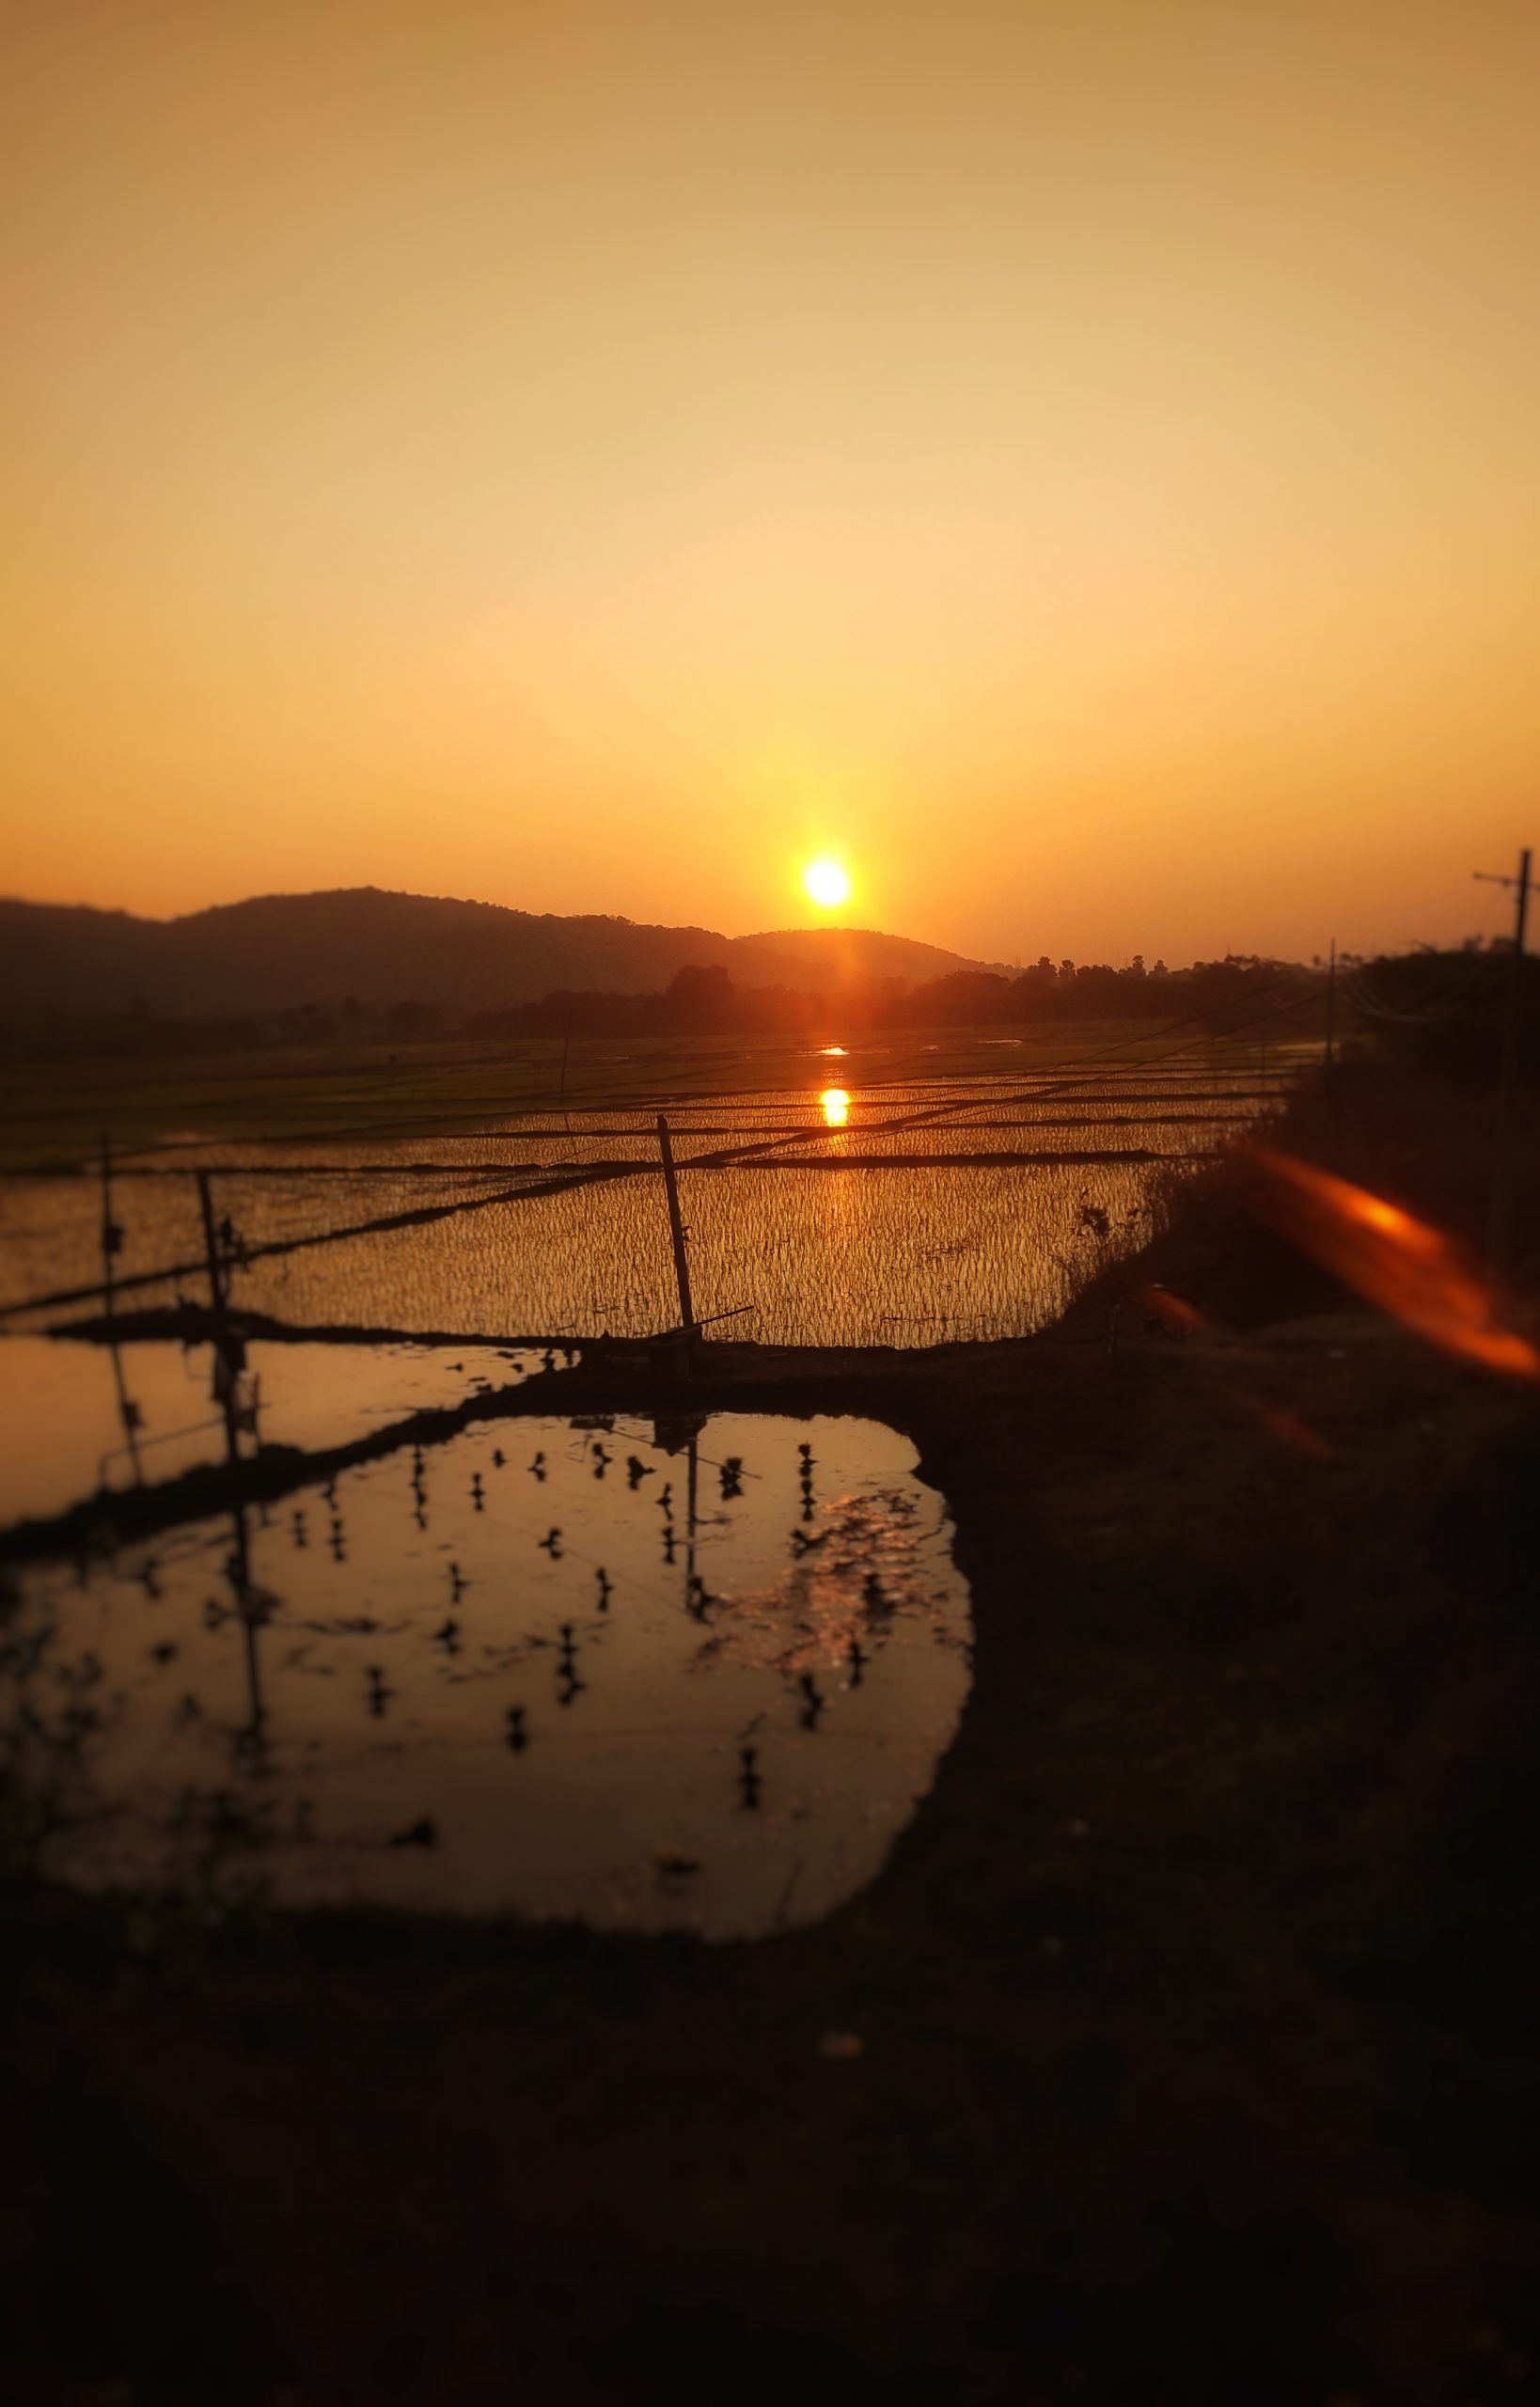 Sunrise through paddy fields